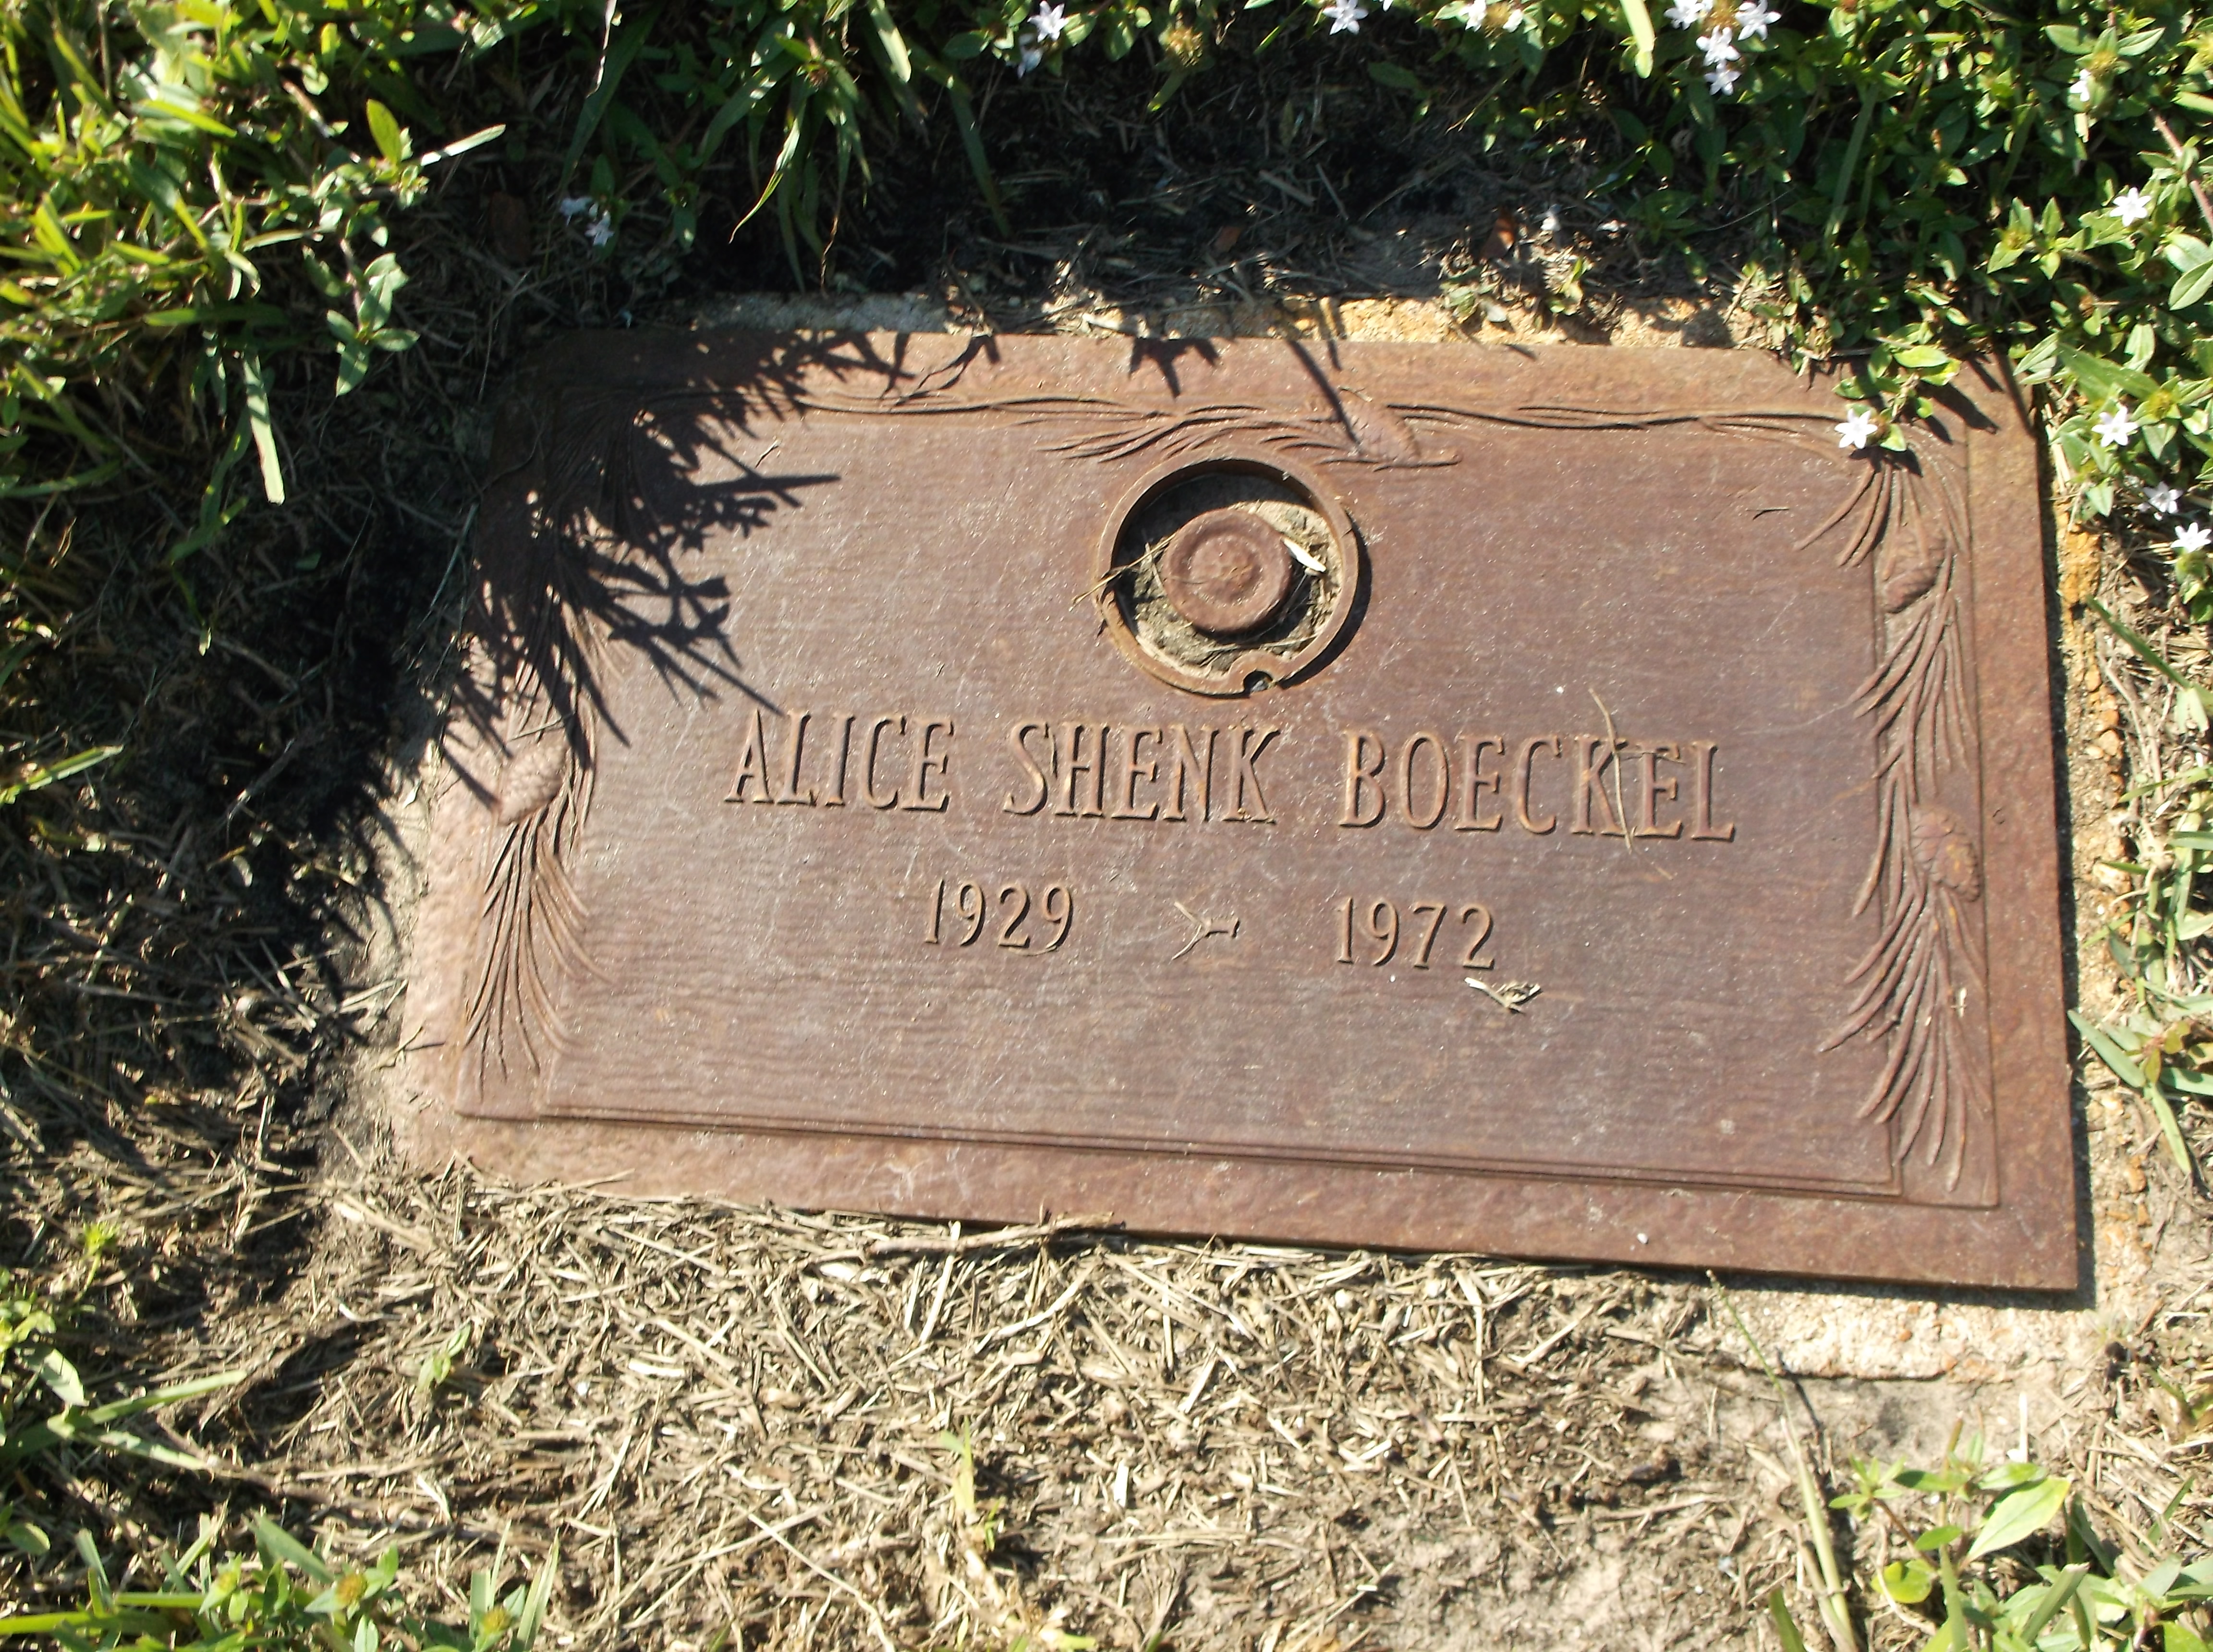 Alice Shenk Boeckel